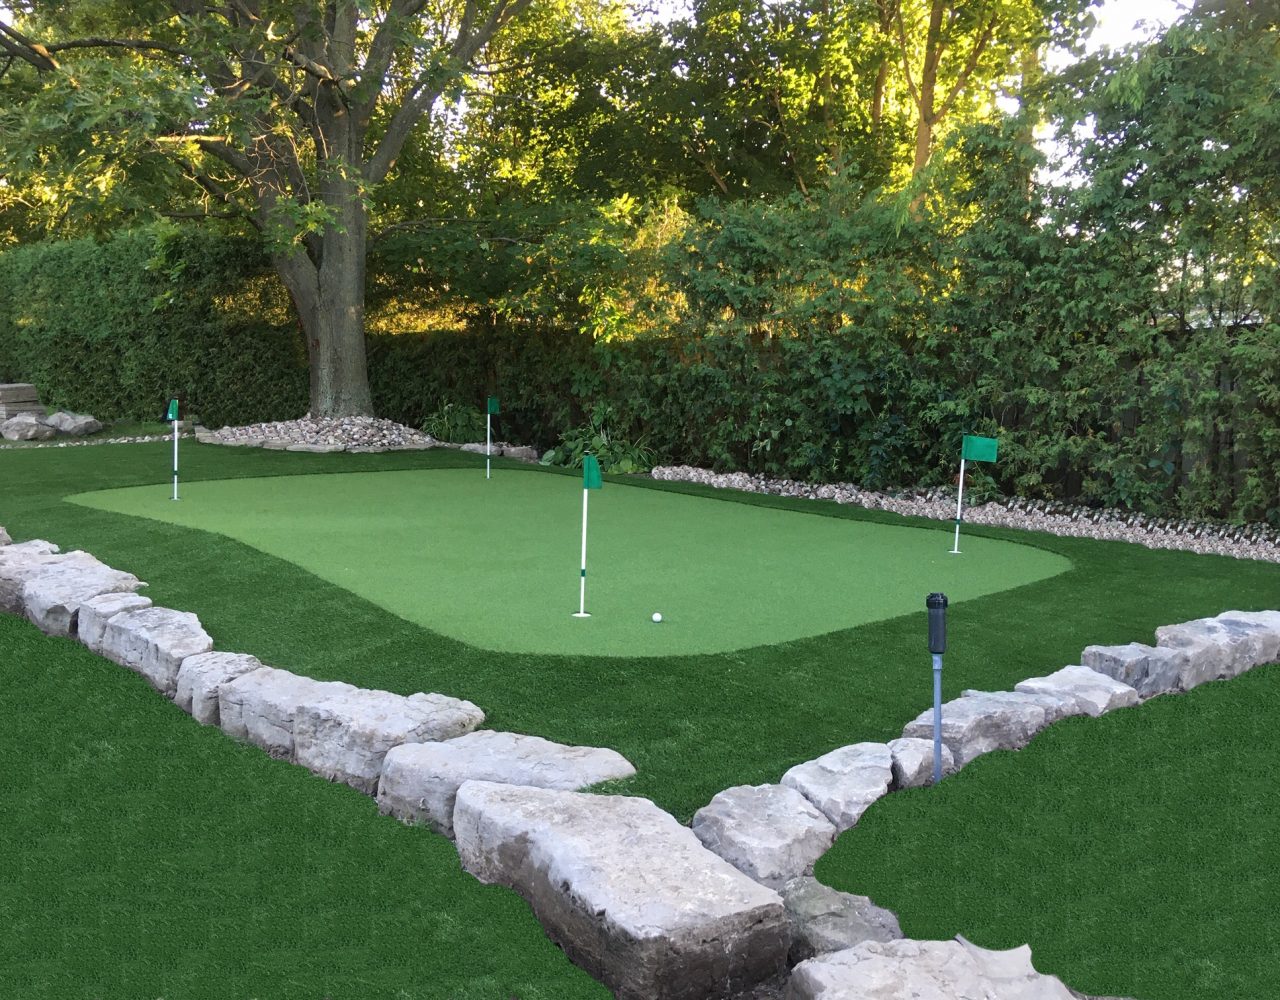 Golf green 4 hole- Armour stone border